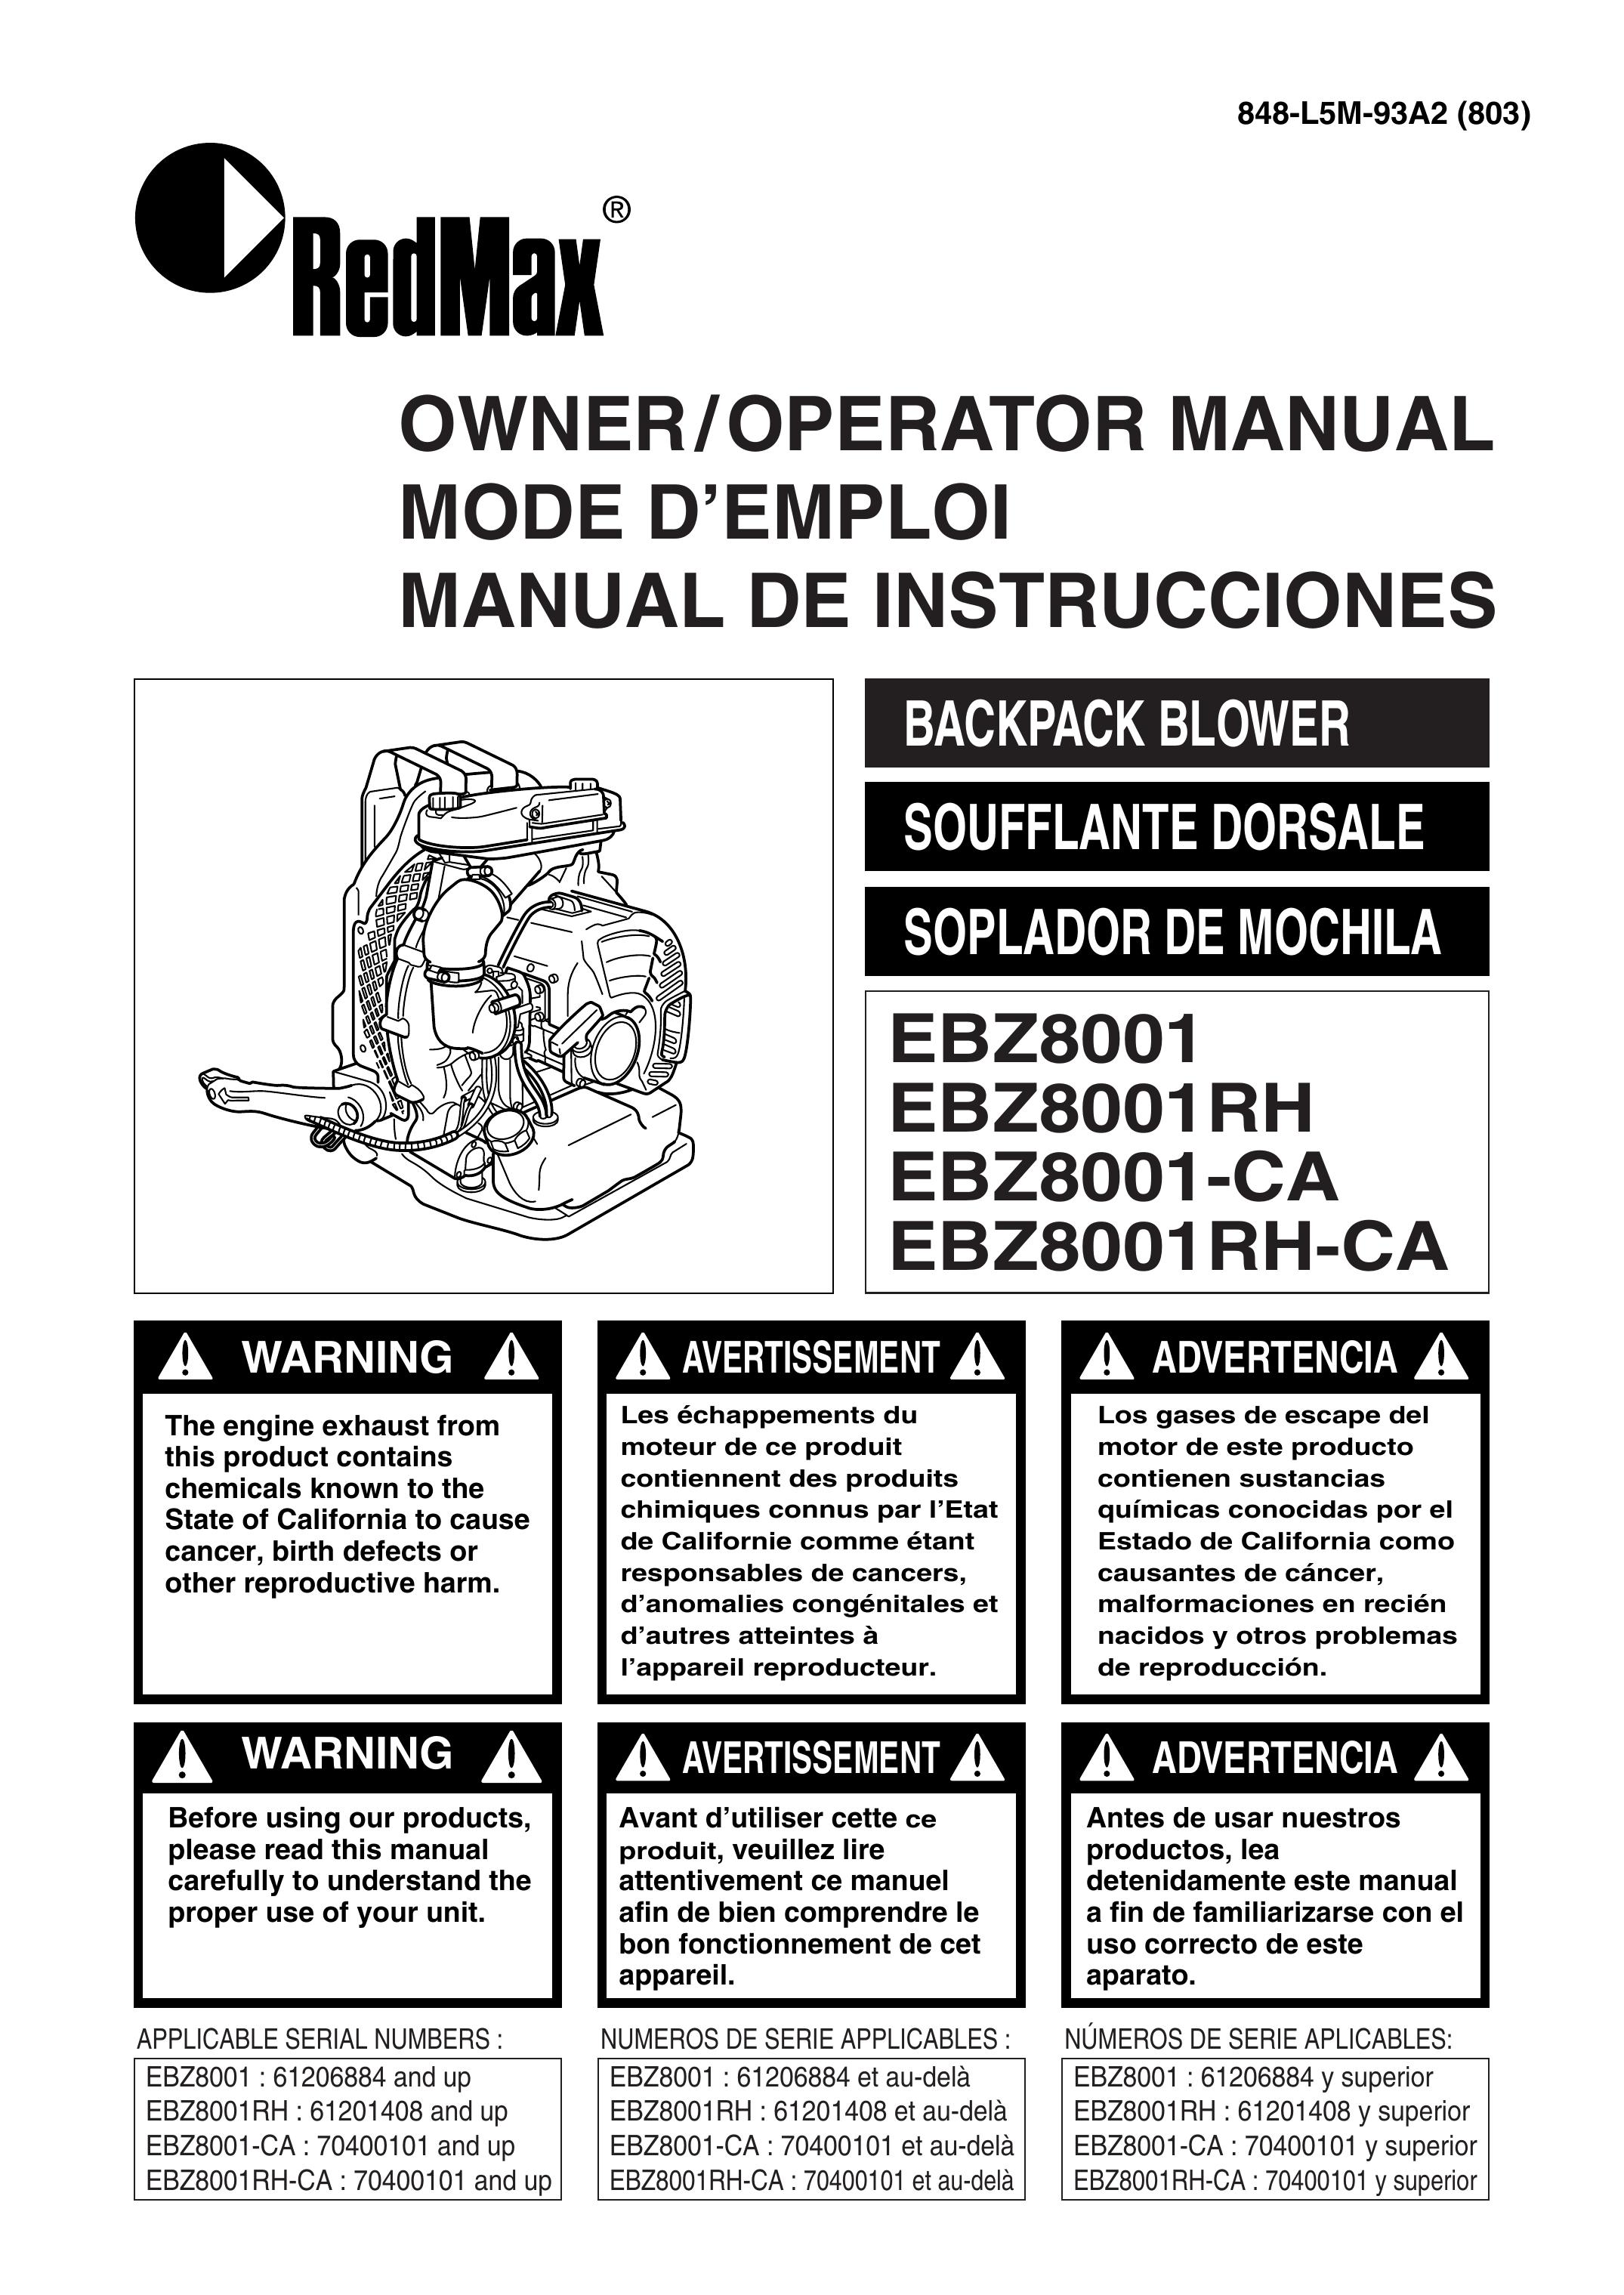 RedMax EBZ8001RH-CA Blower User Manual